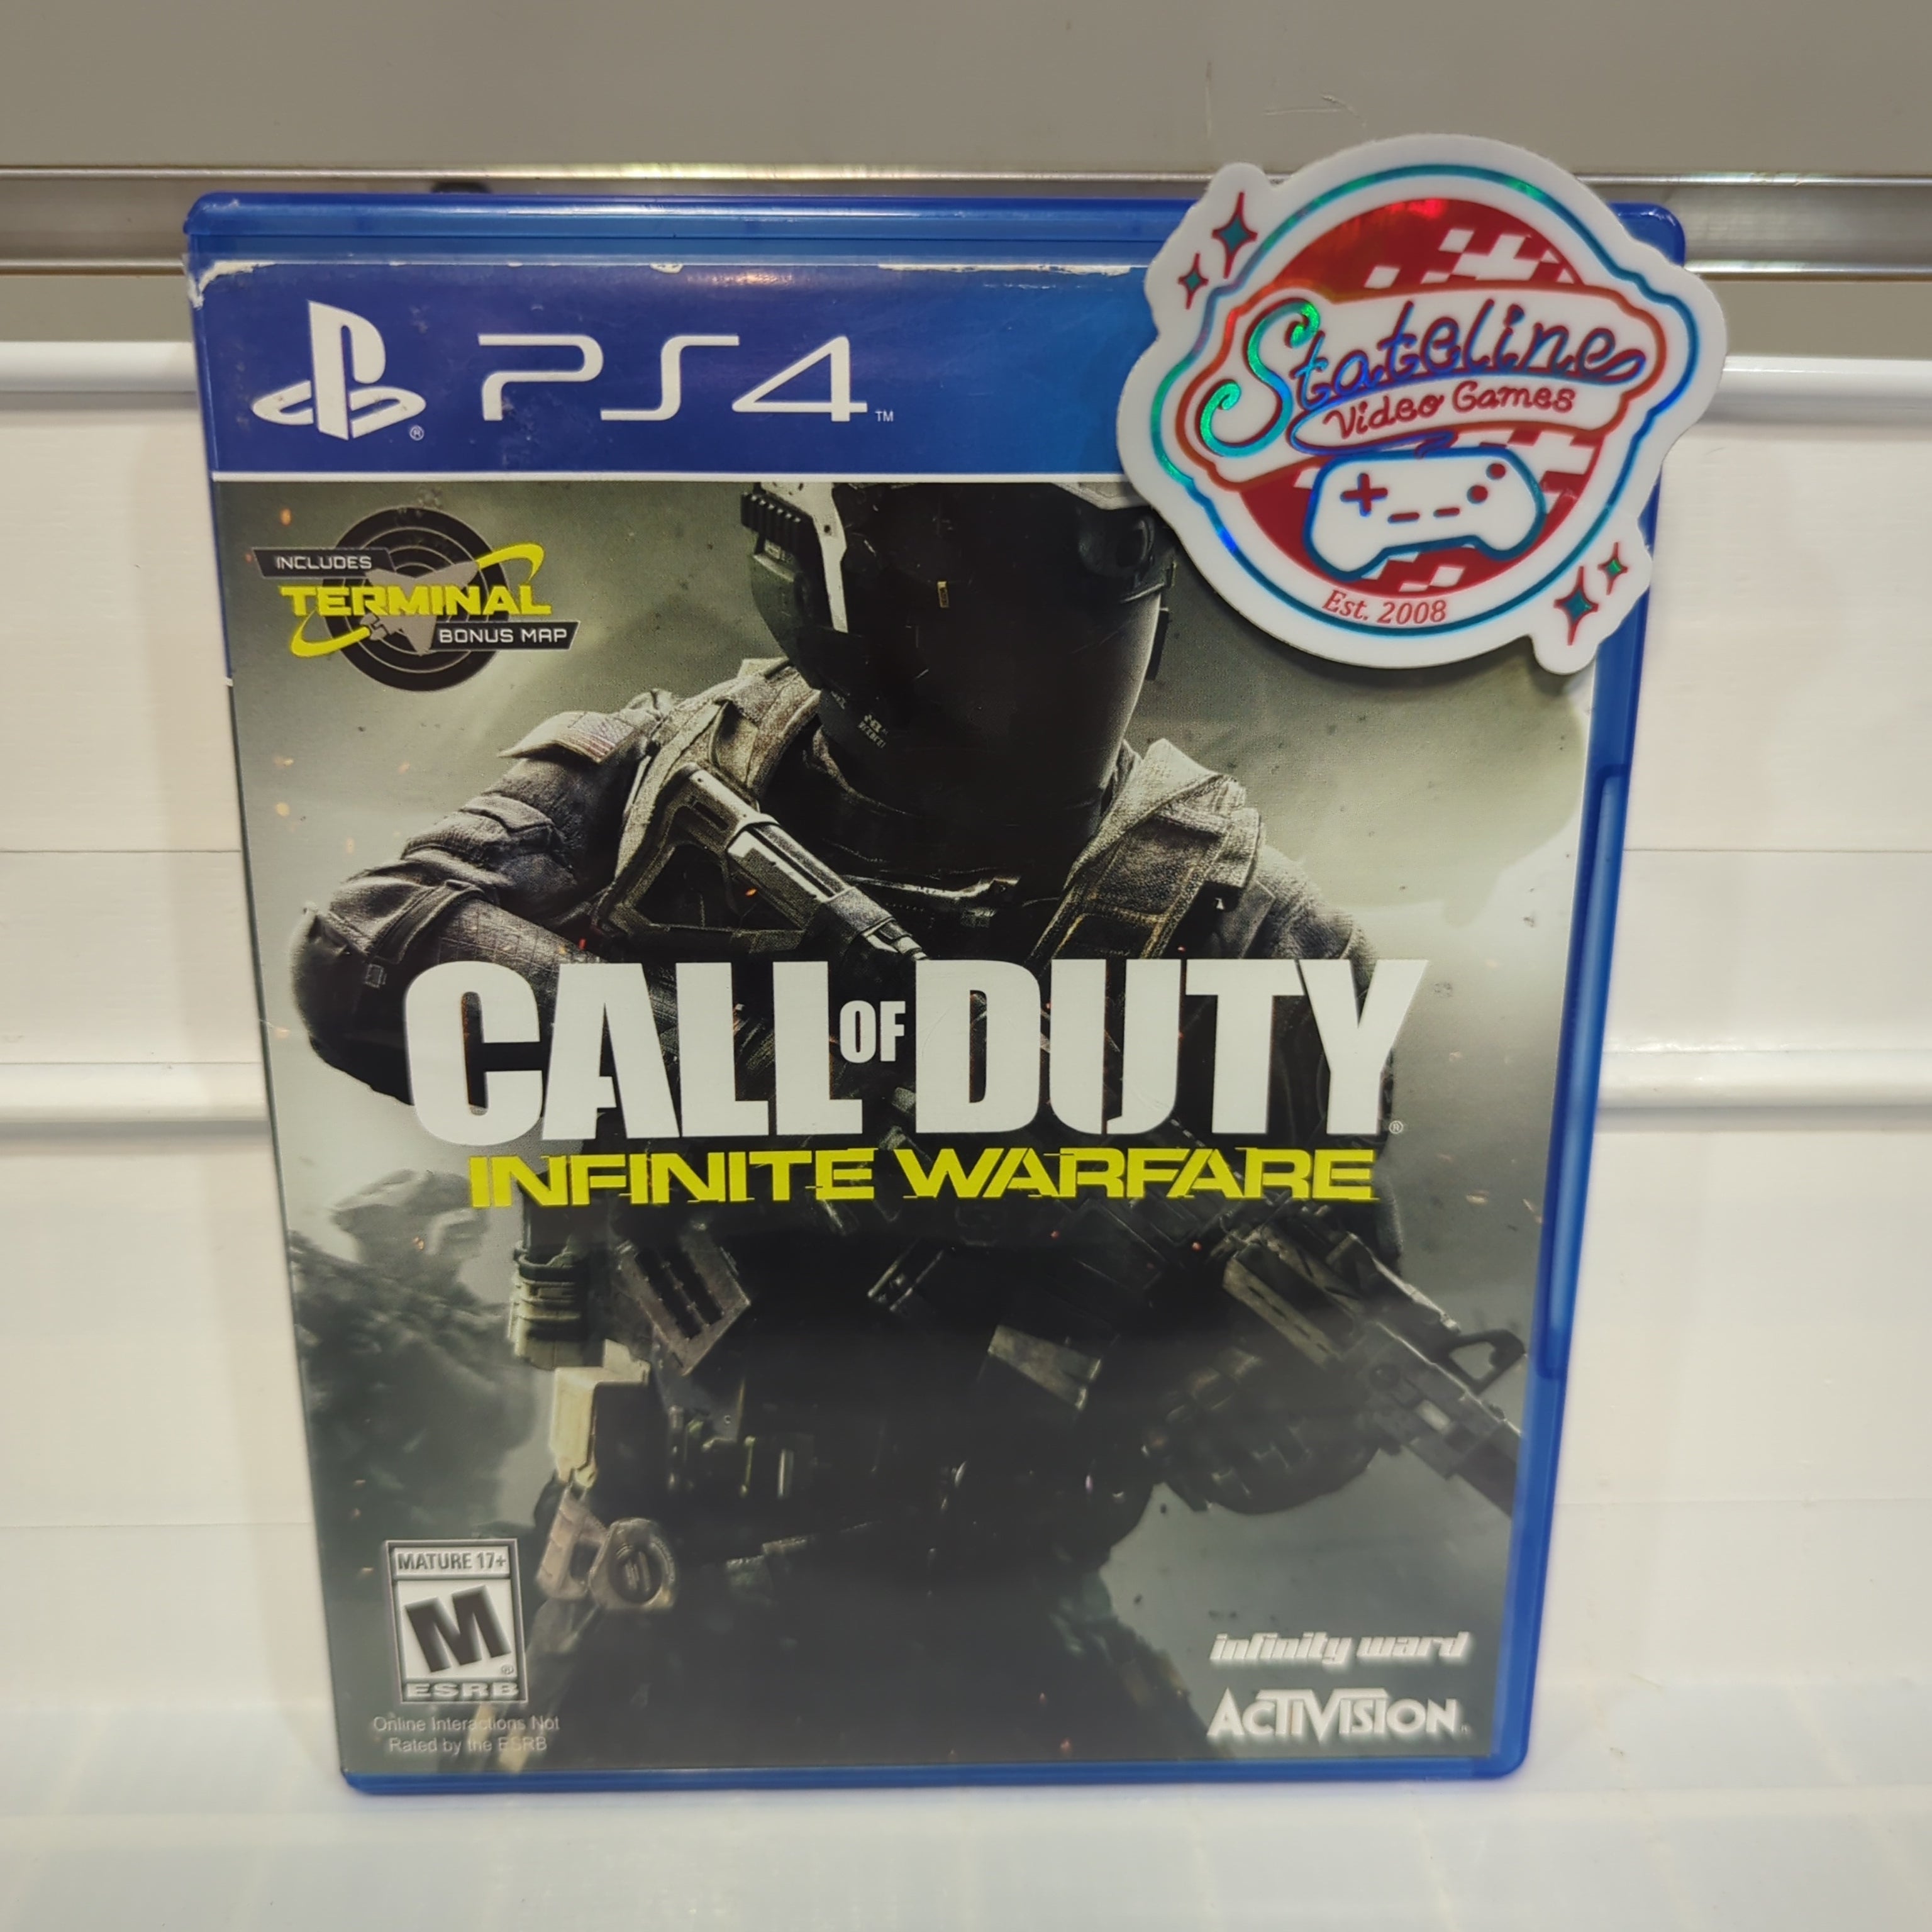 Call Of Duty Infinite Warfare Stand Ed Ps4 Físico Wiisanfer